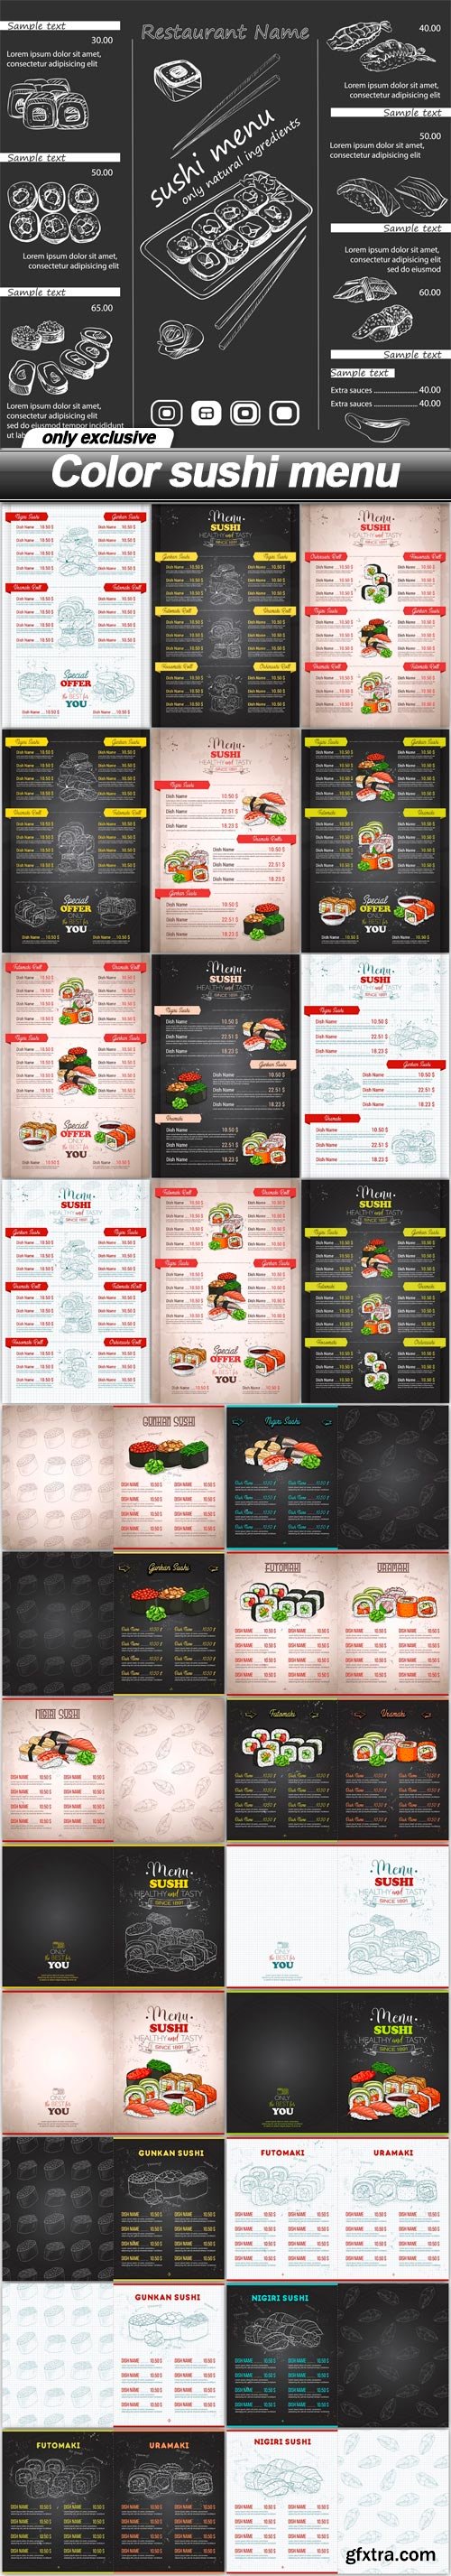 Color sushi menu - 28 EPS